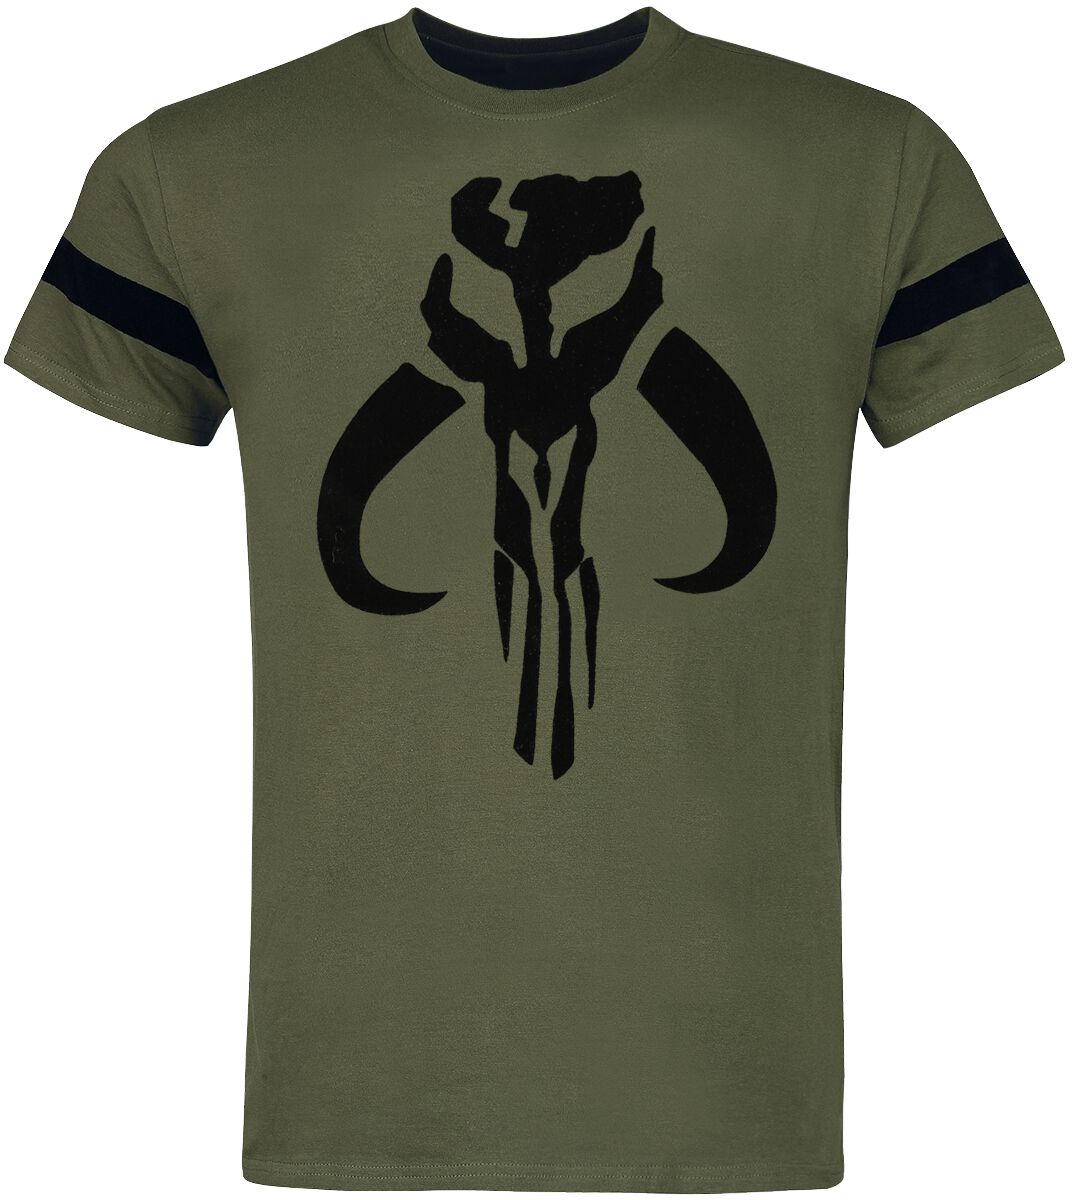 The Mandalorian Skull Flock T-Shirt grün von Star Wars